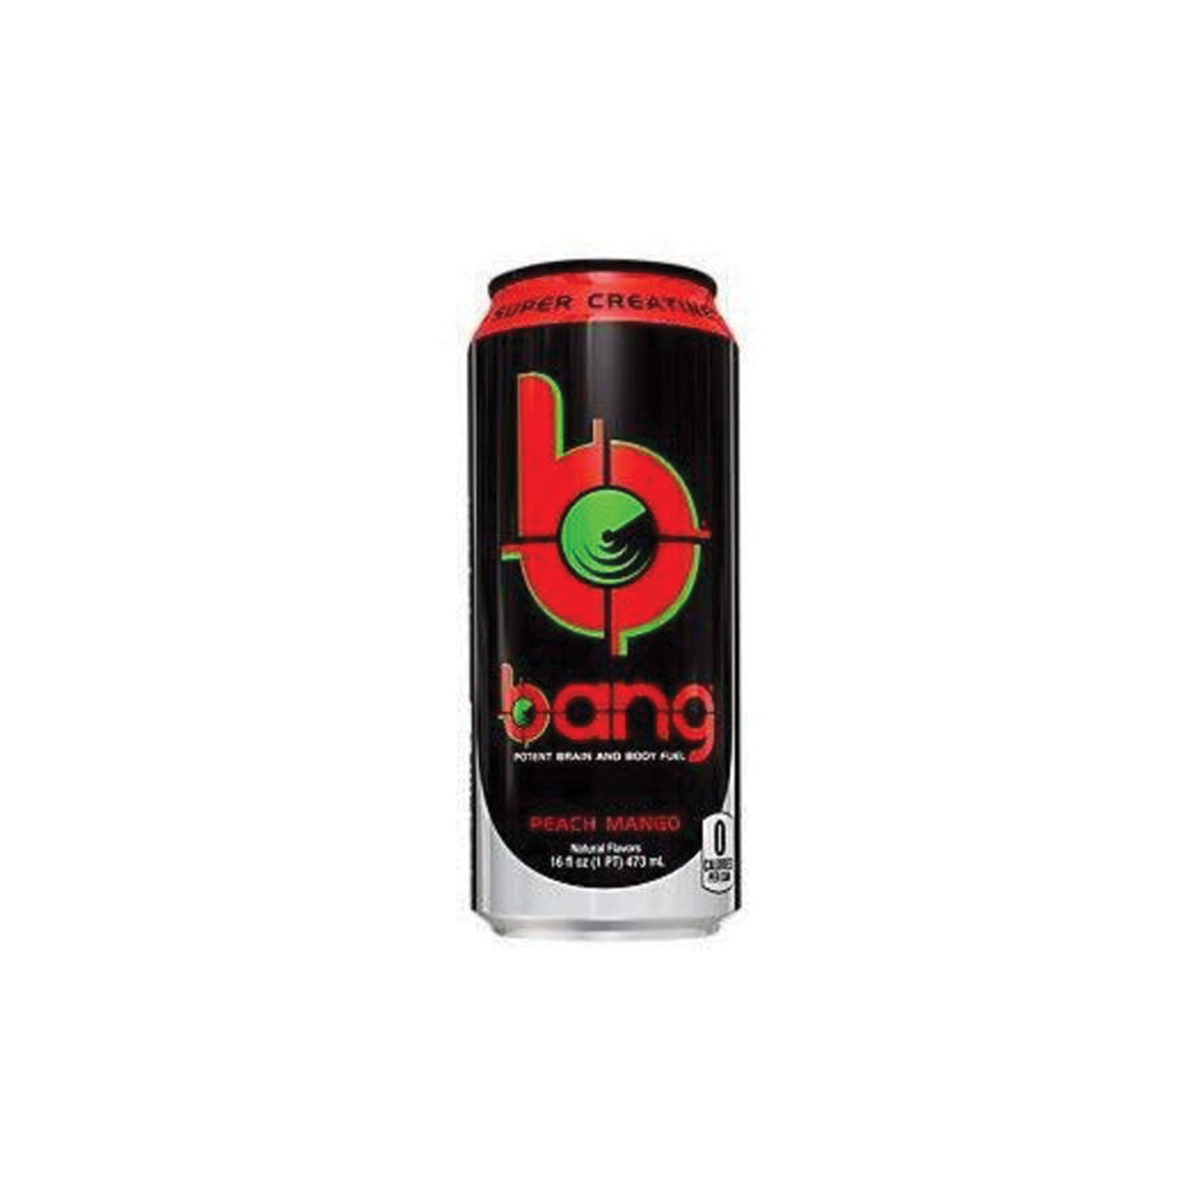 168935 Energy Drink, Liquid, Peach Mango Flavor, 16 oz Can